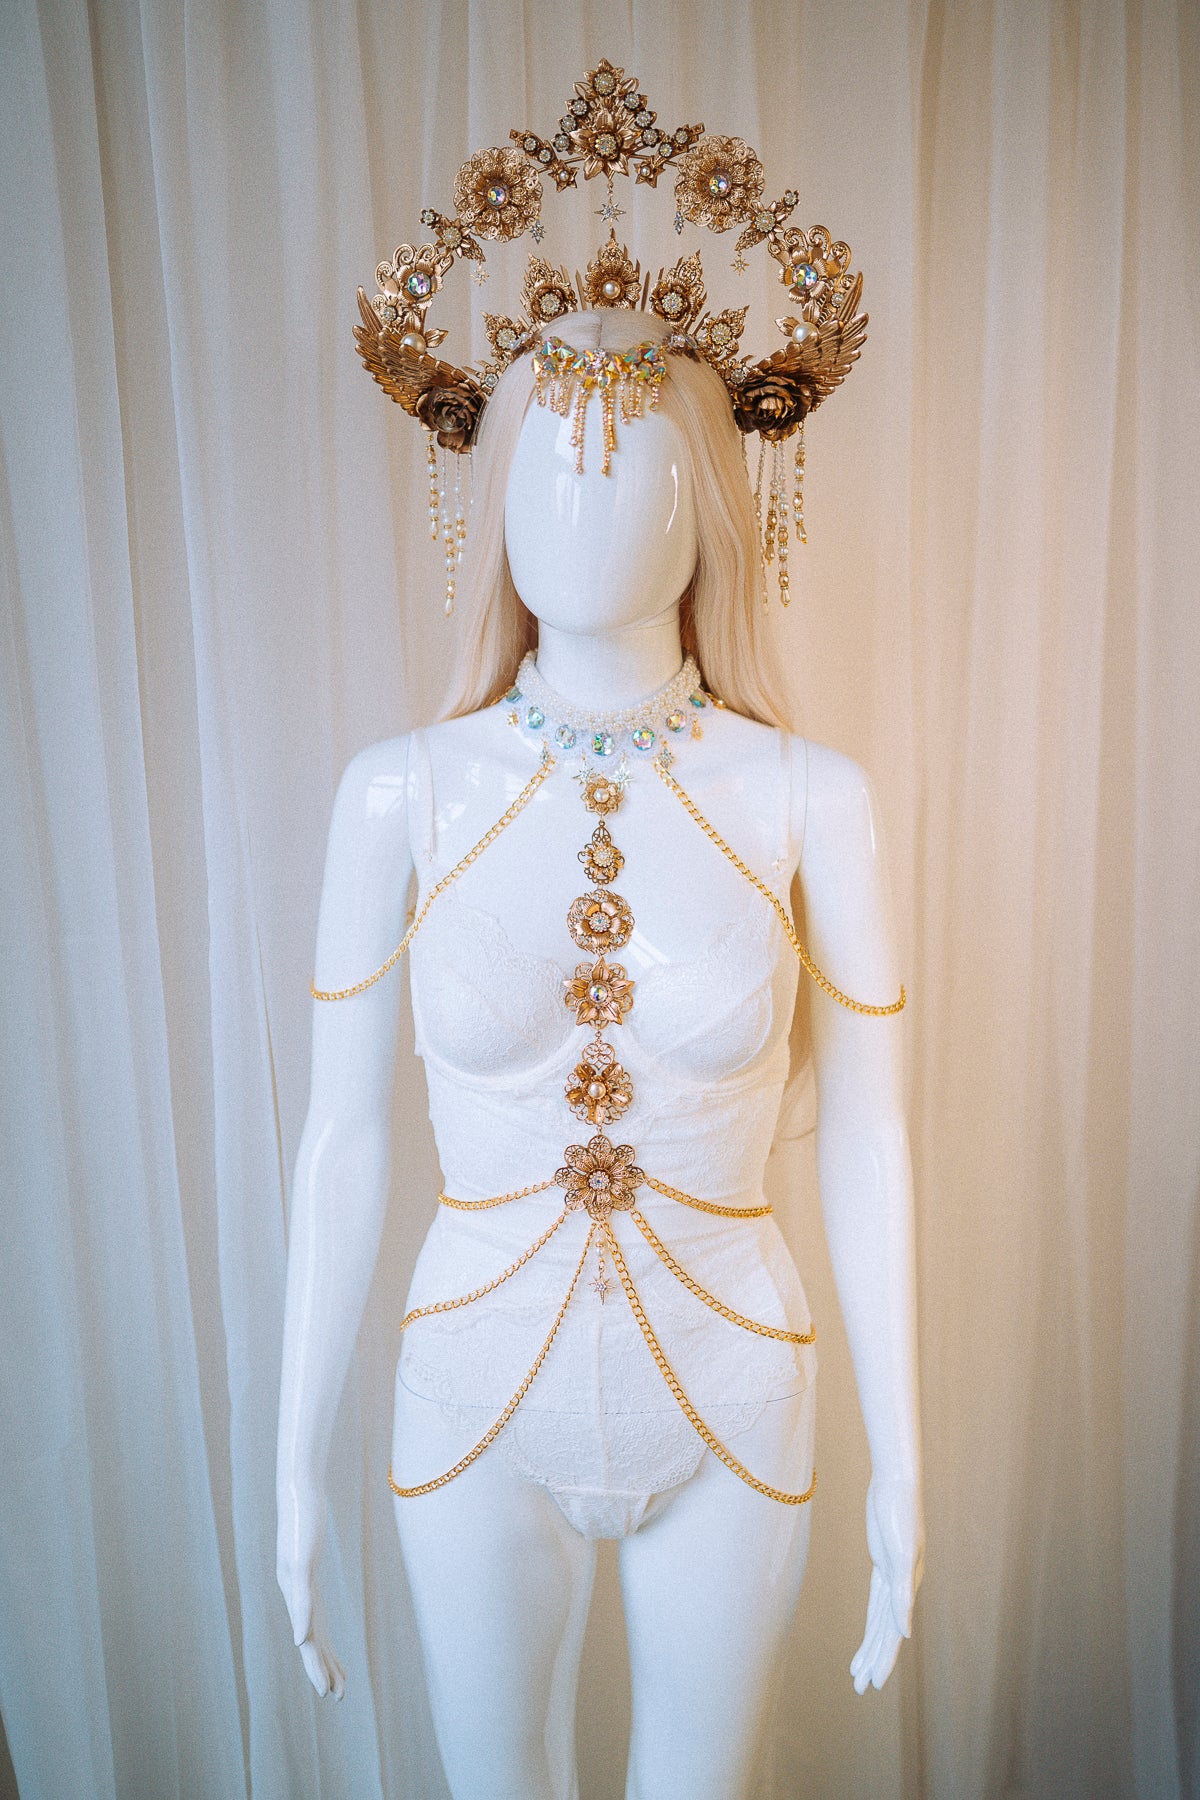 Gold Bra Chain Body Harness Dancer Costume Chain Dress Festival